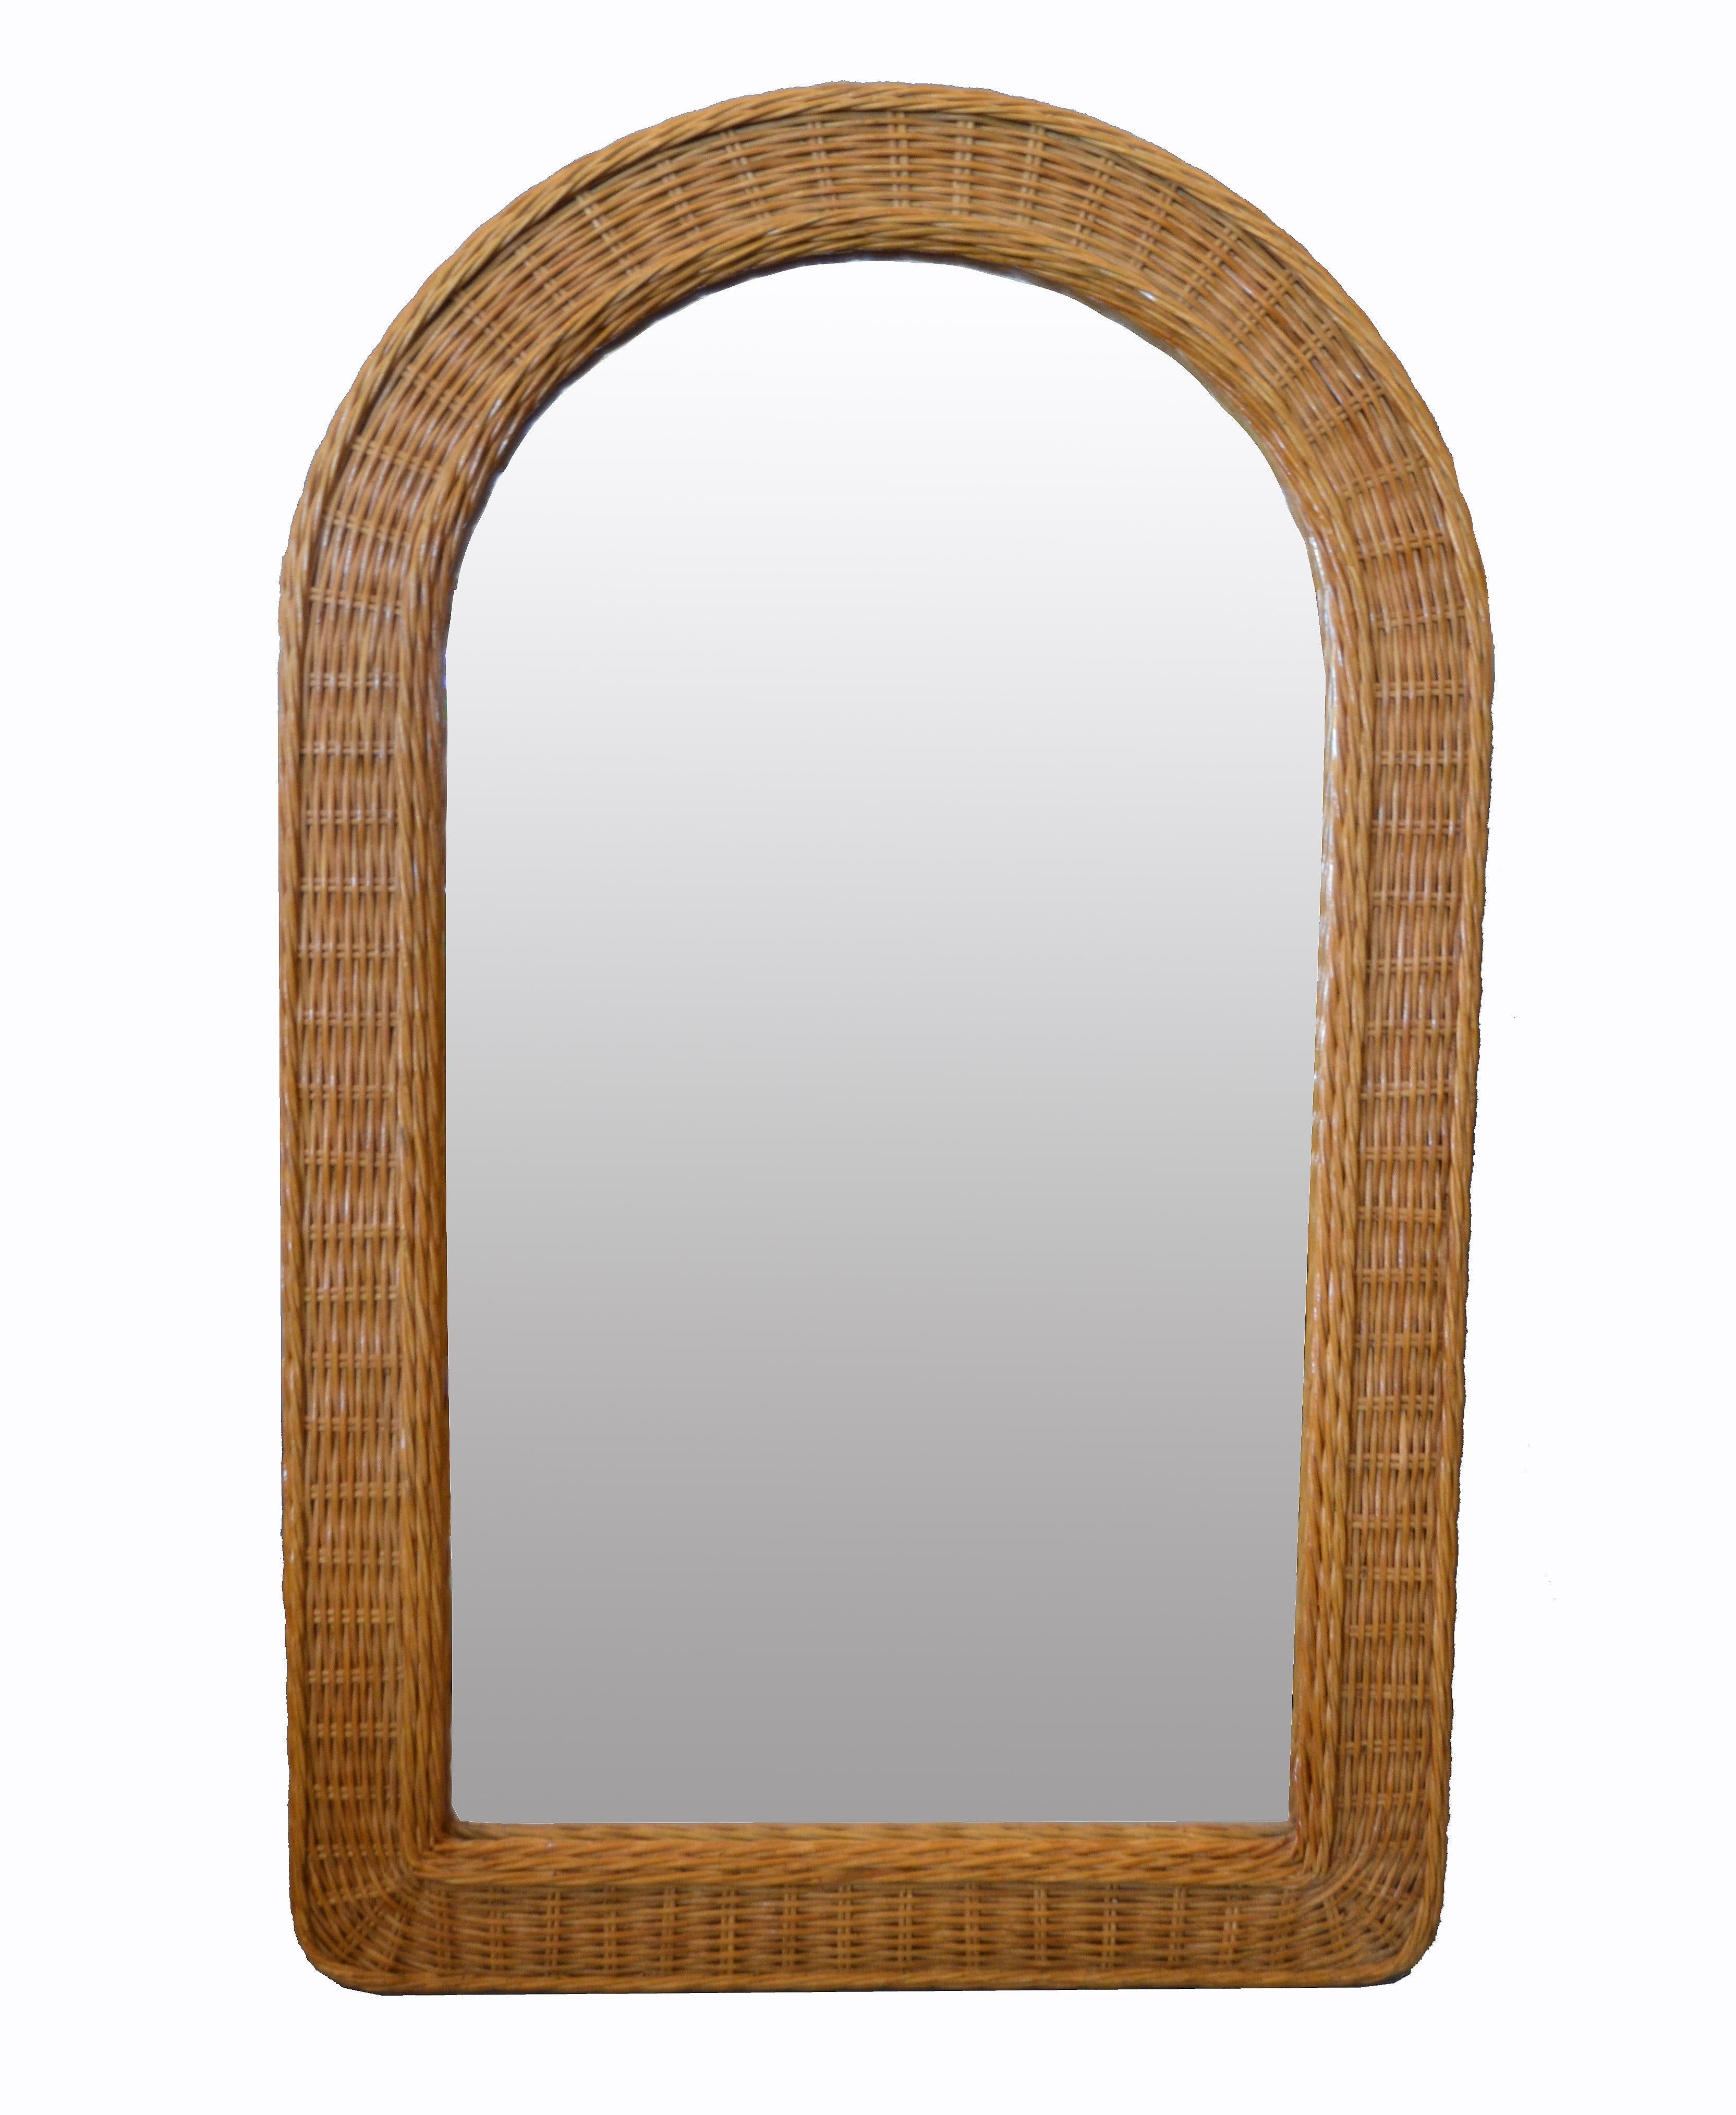 Mid-Century Modern Arch Handwoven Rattan / Wicker Wall Mirror Boho Chic 3